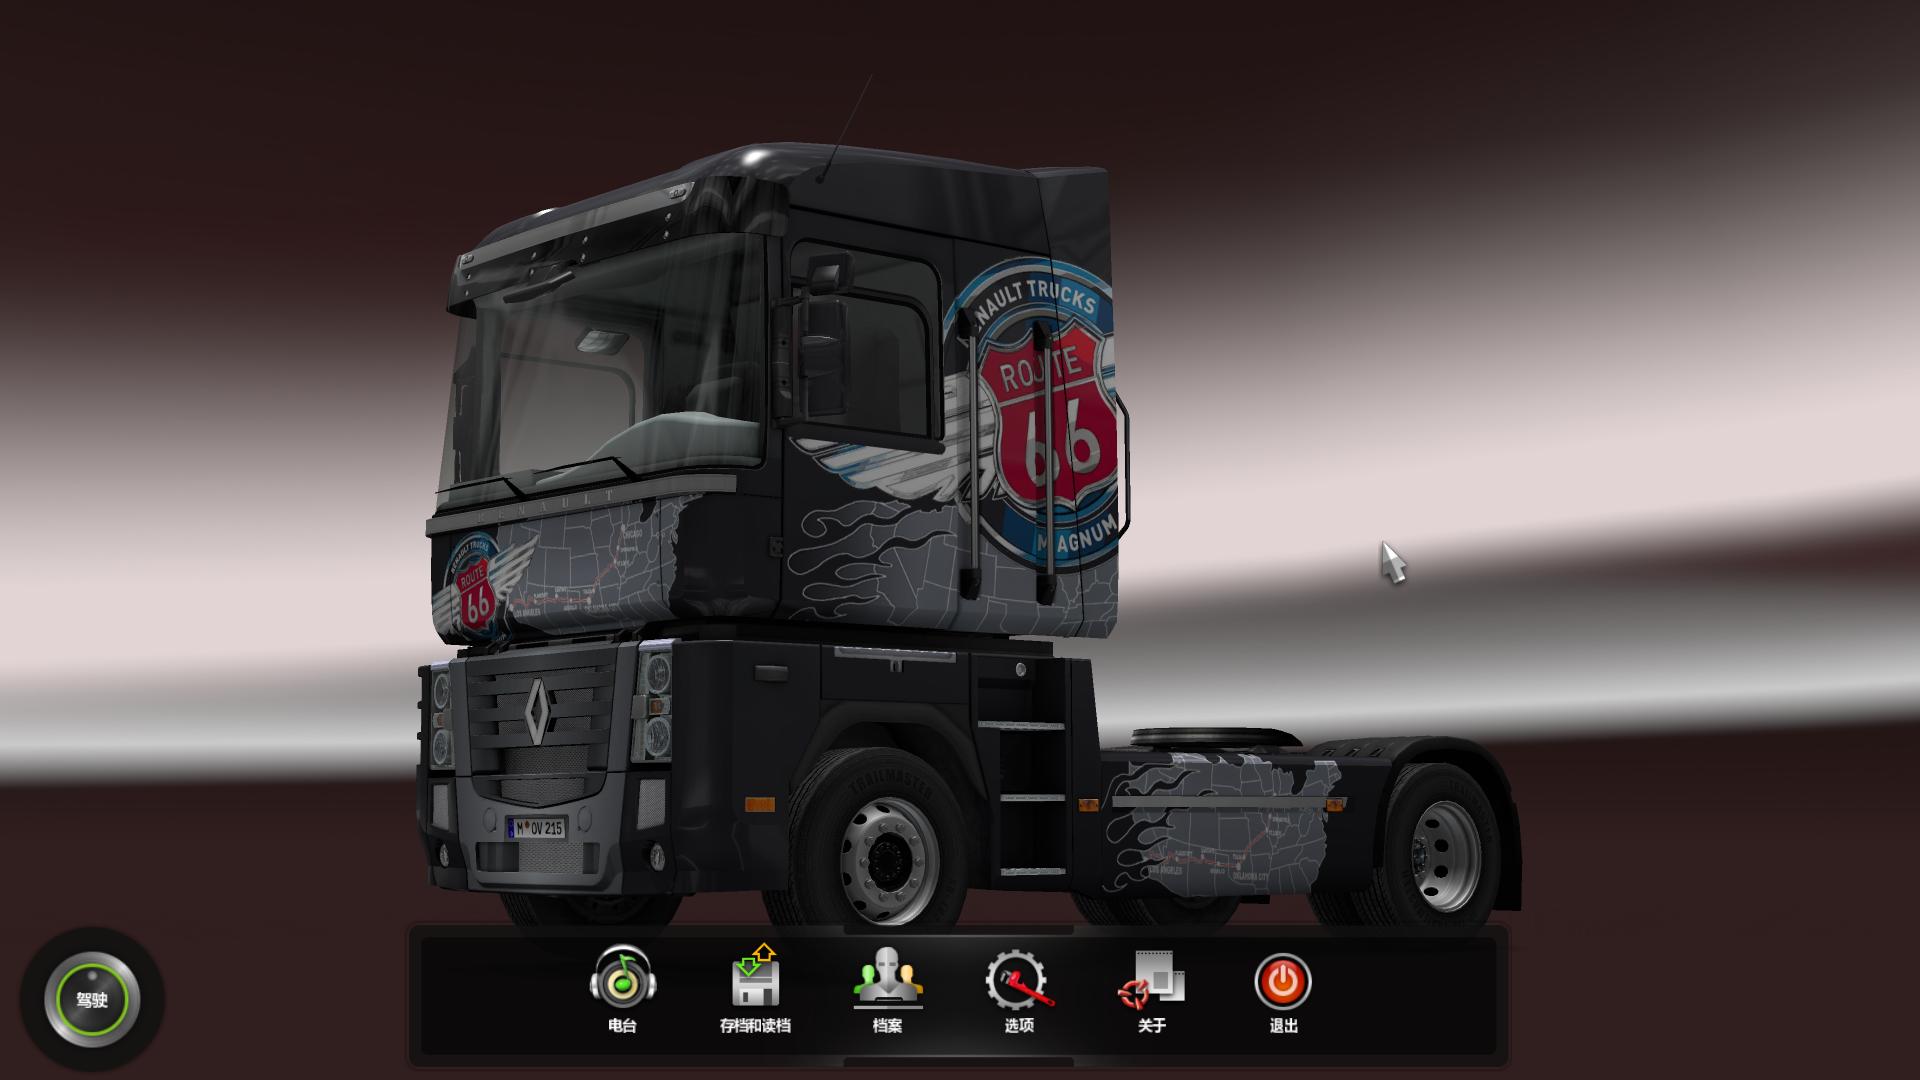 ŷ޿ģ2Euro Truck Simulator 2v1.28ACTROS MP3 STOCK